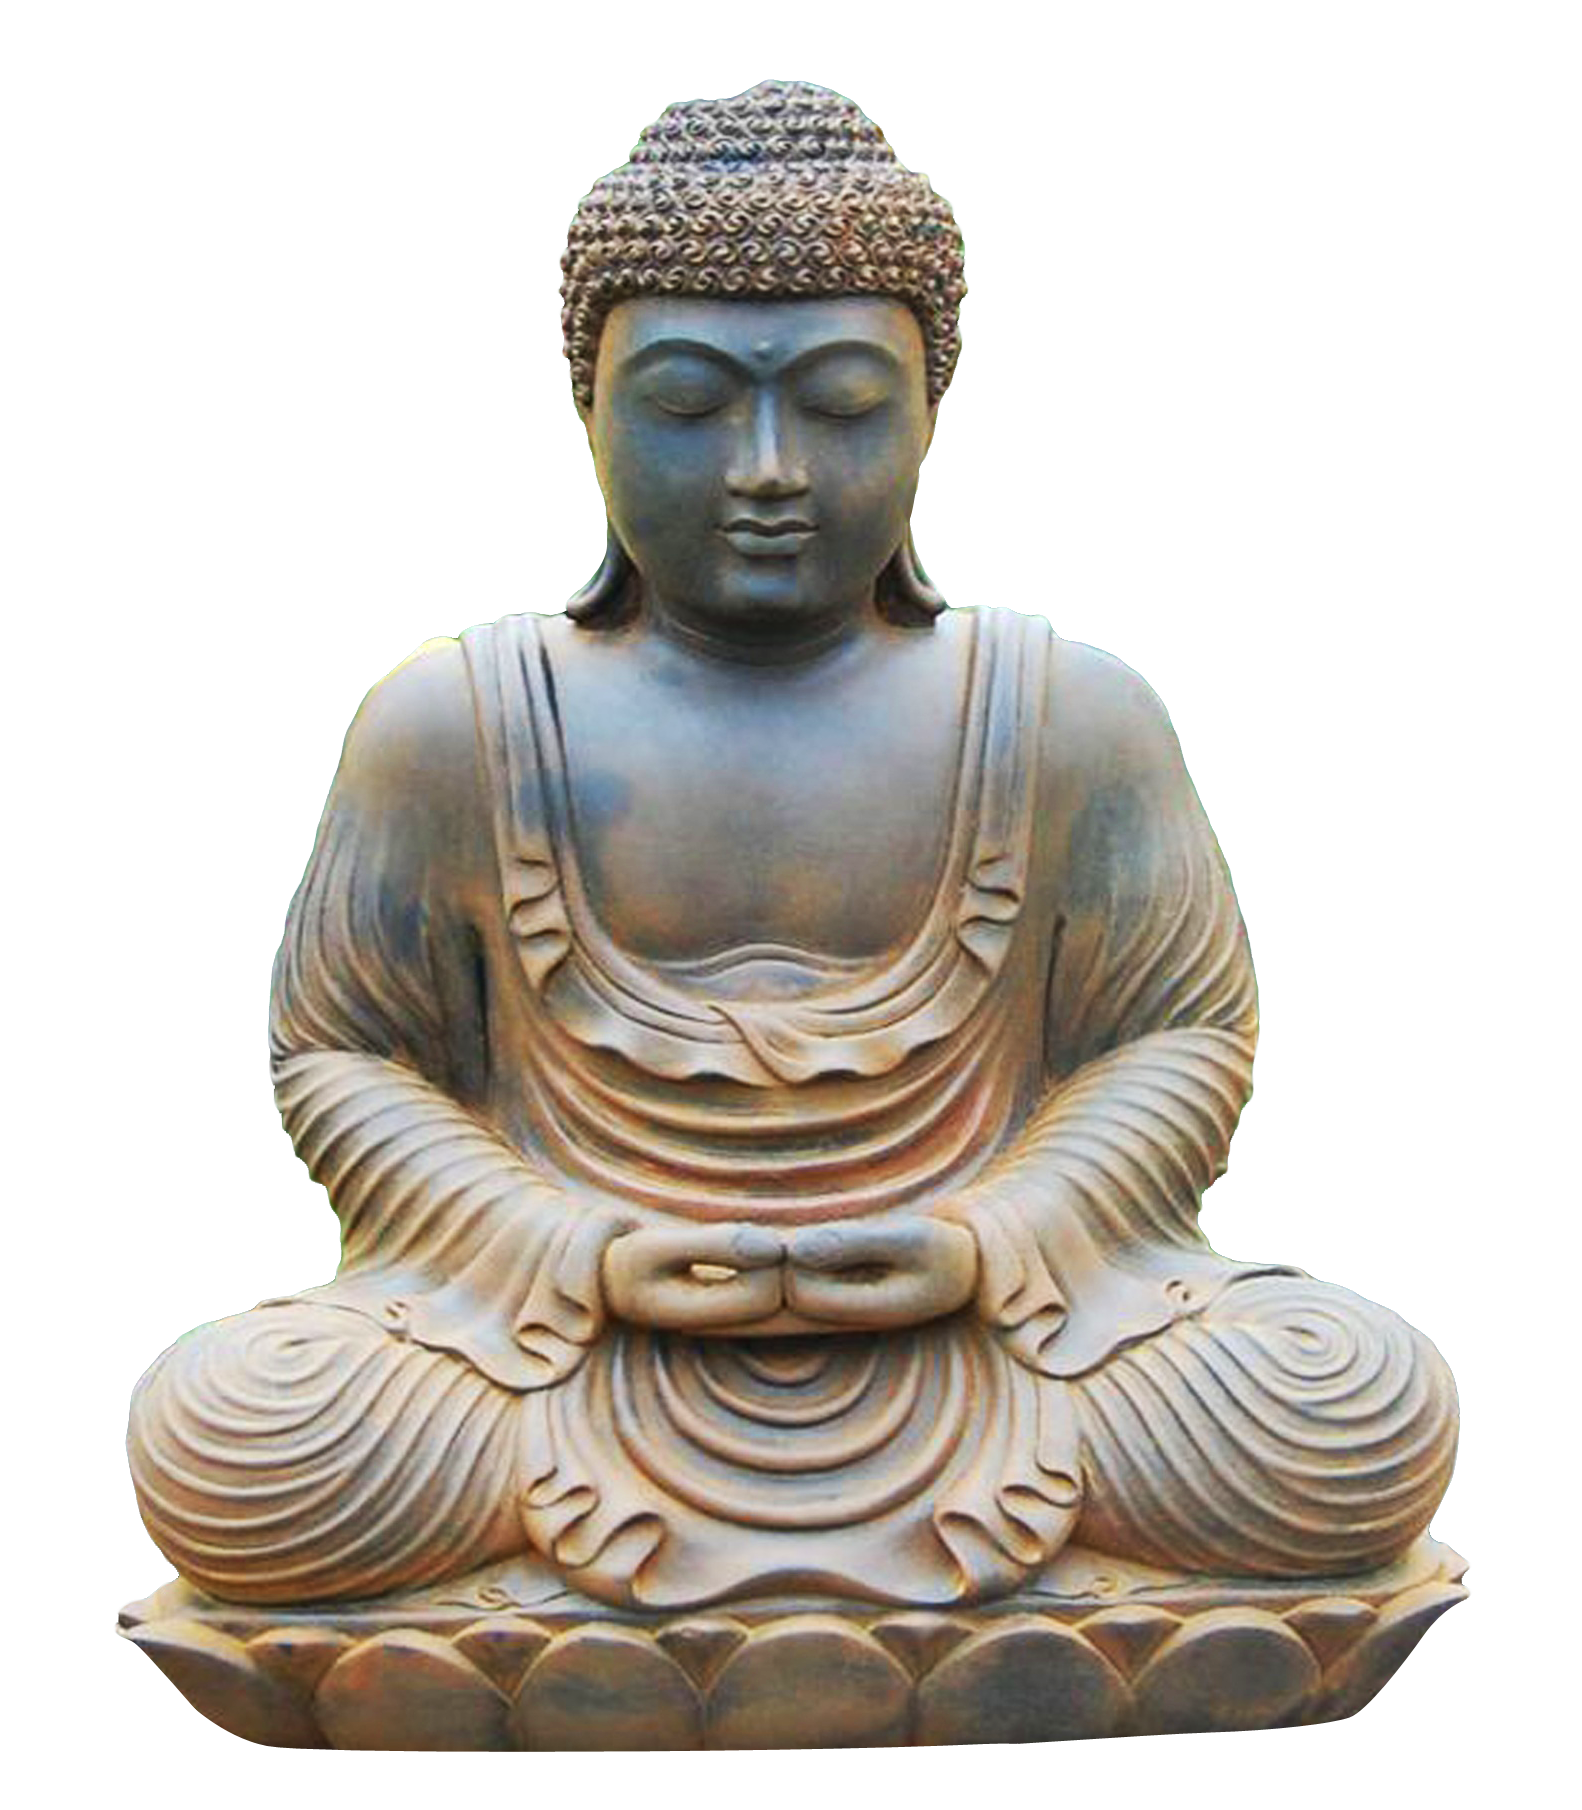 Gautama Buddha Meditation PNG Picture